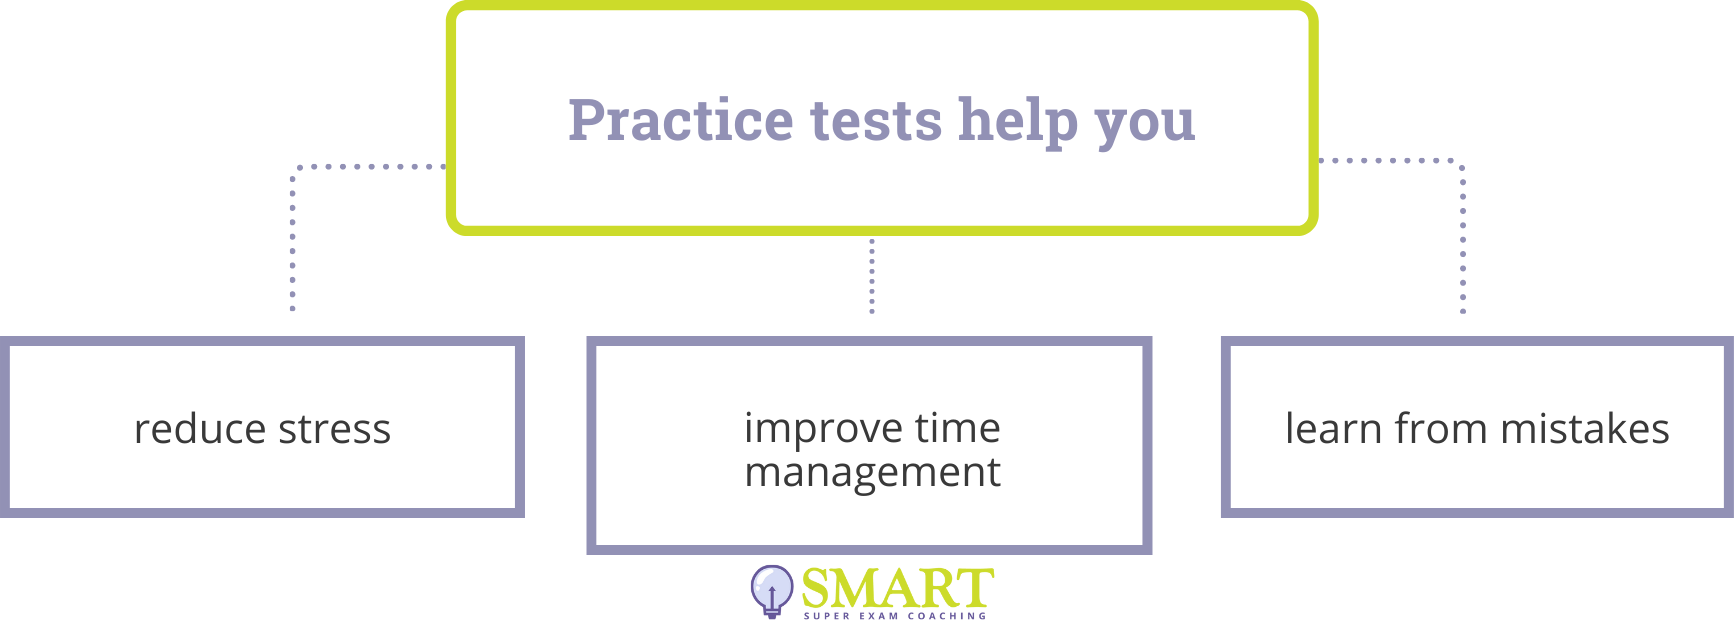 Practice Tests Help You